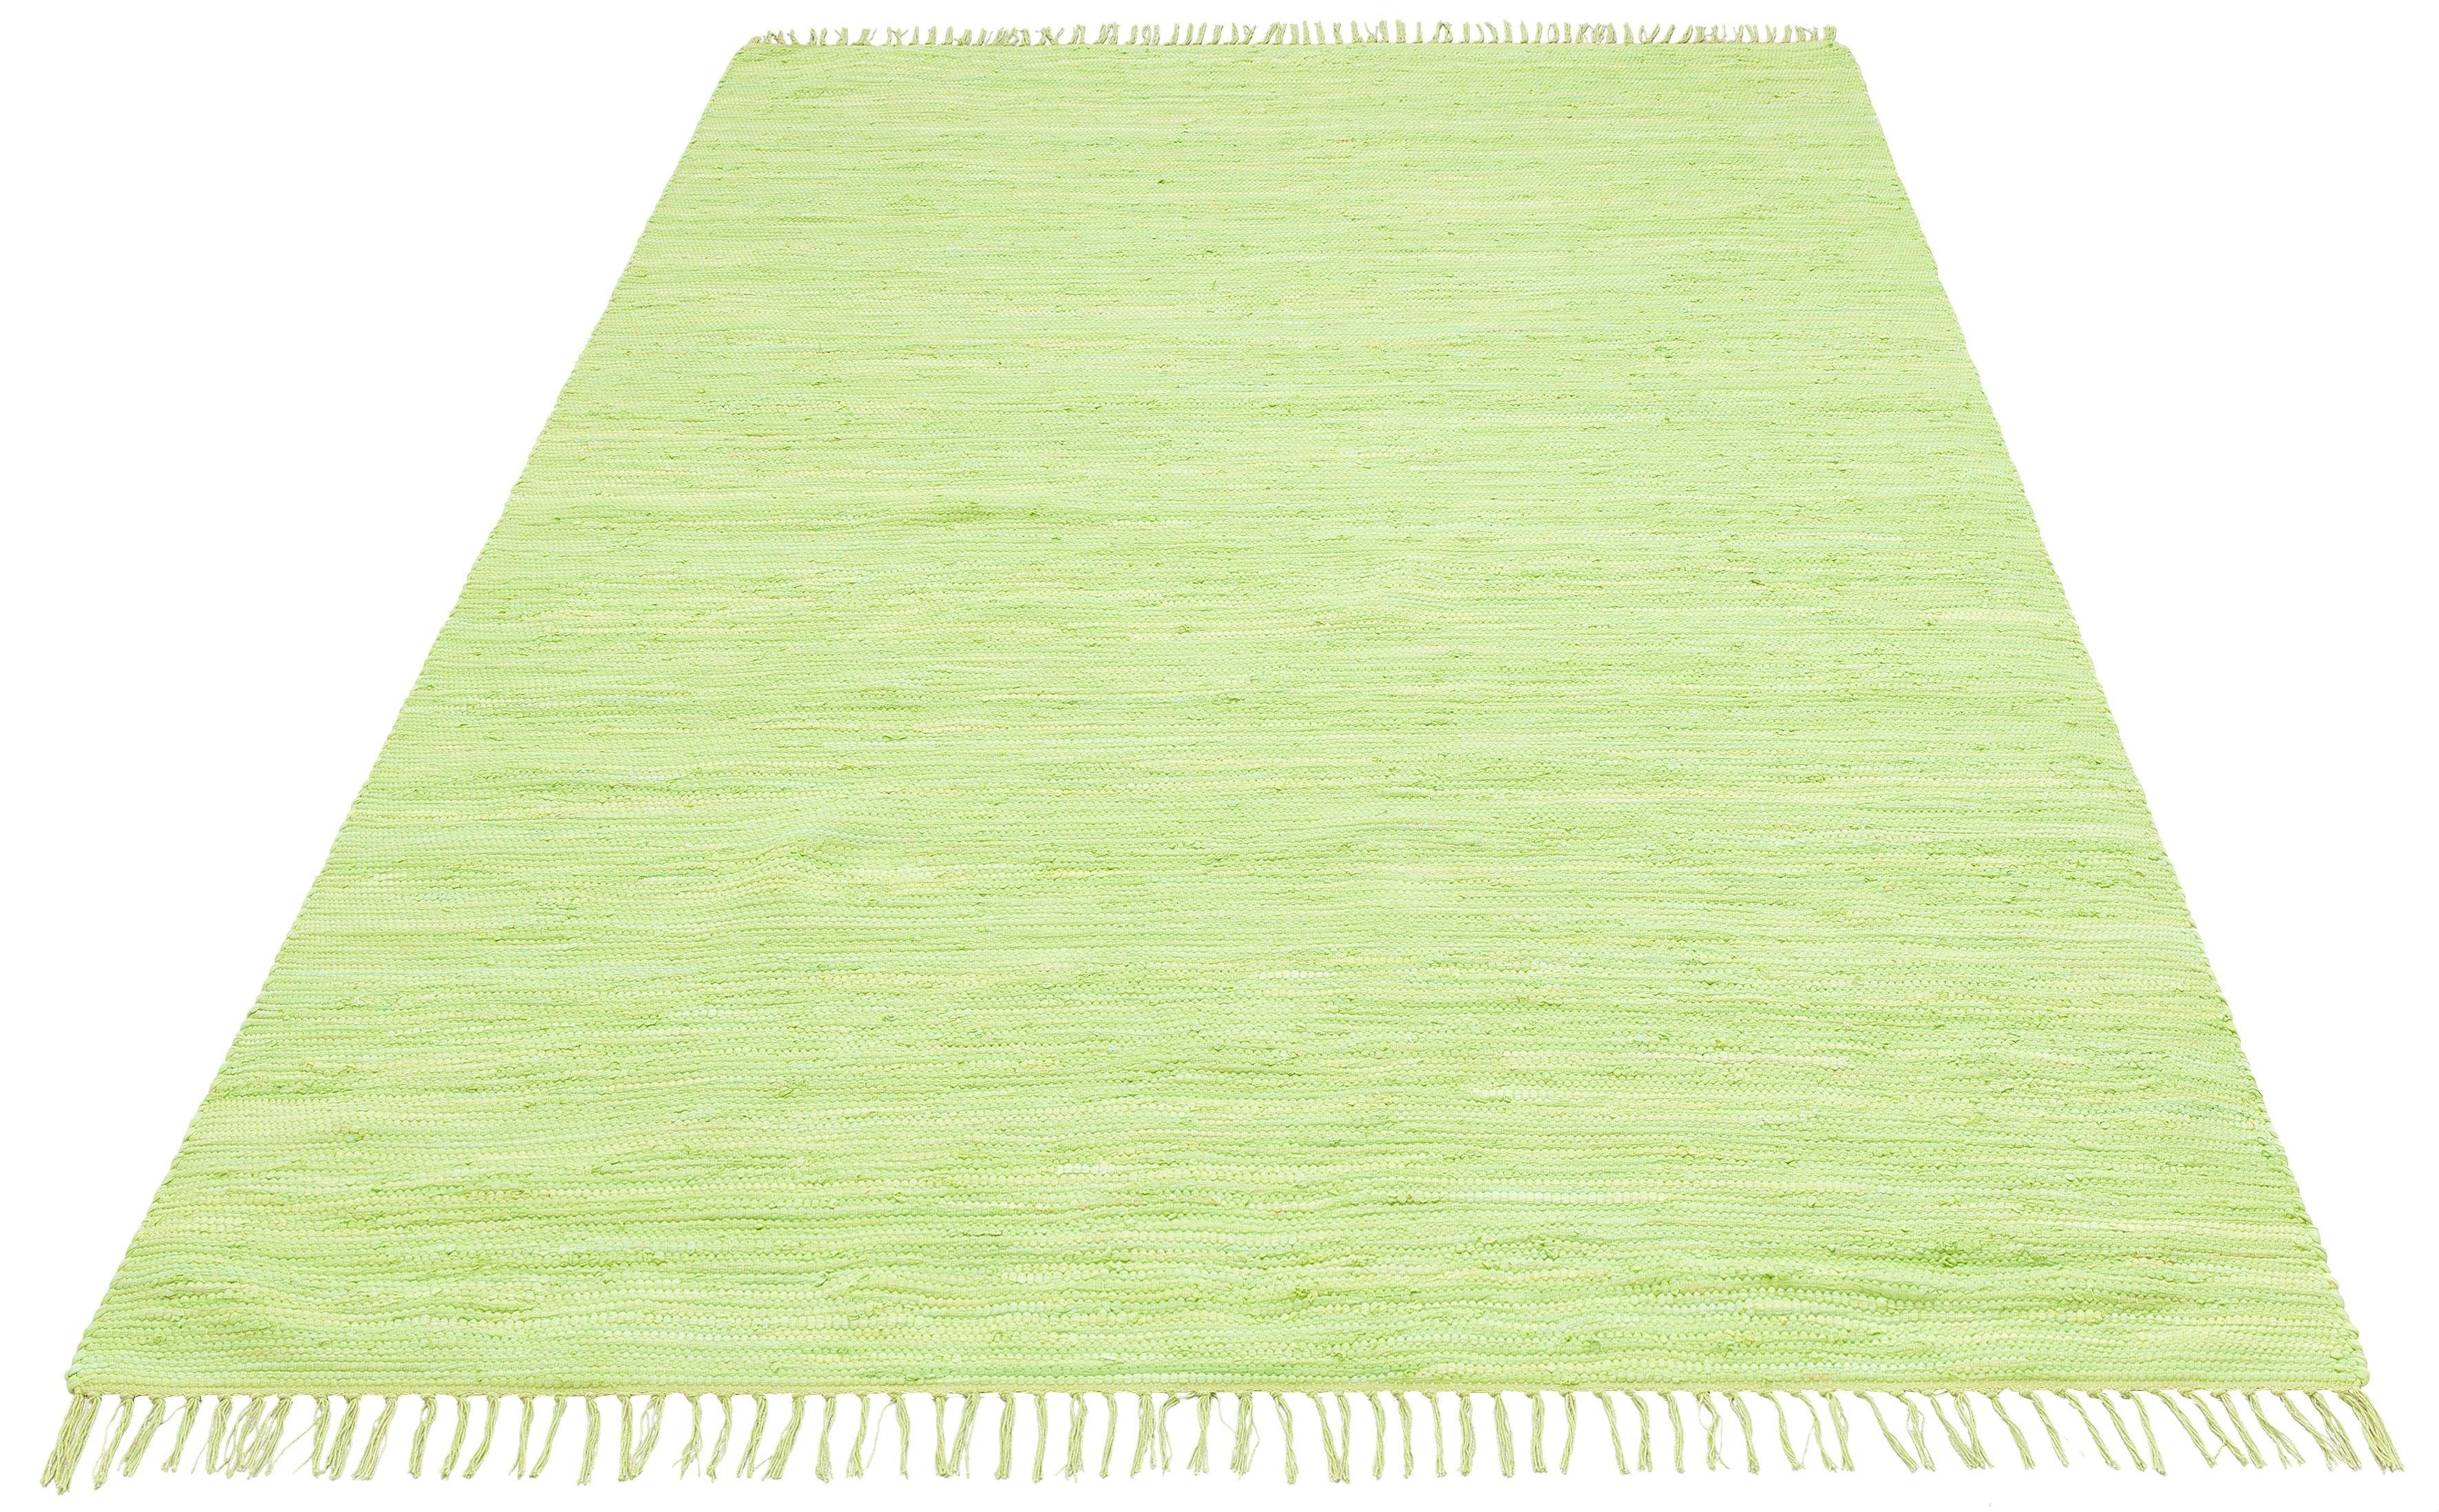 Lüttenhütt Teppich »Paul«, rechteckig, 5 mm Höhe, handgewebt, beidseitig... grün Größe 120x180 cm 160x230 cm 40x60 cm 60x120 cm 70x140 cm 90x160 cm